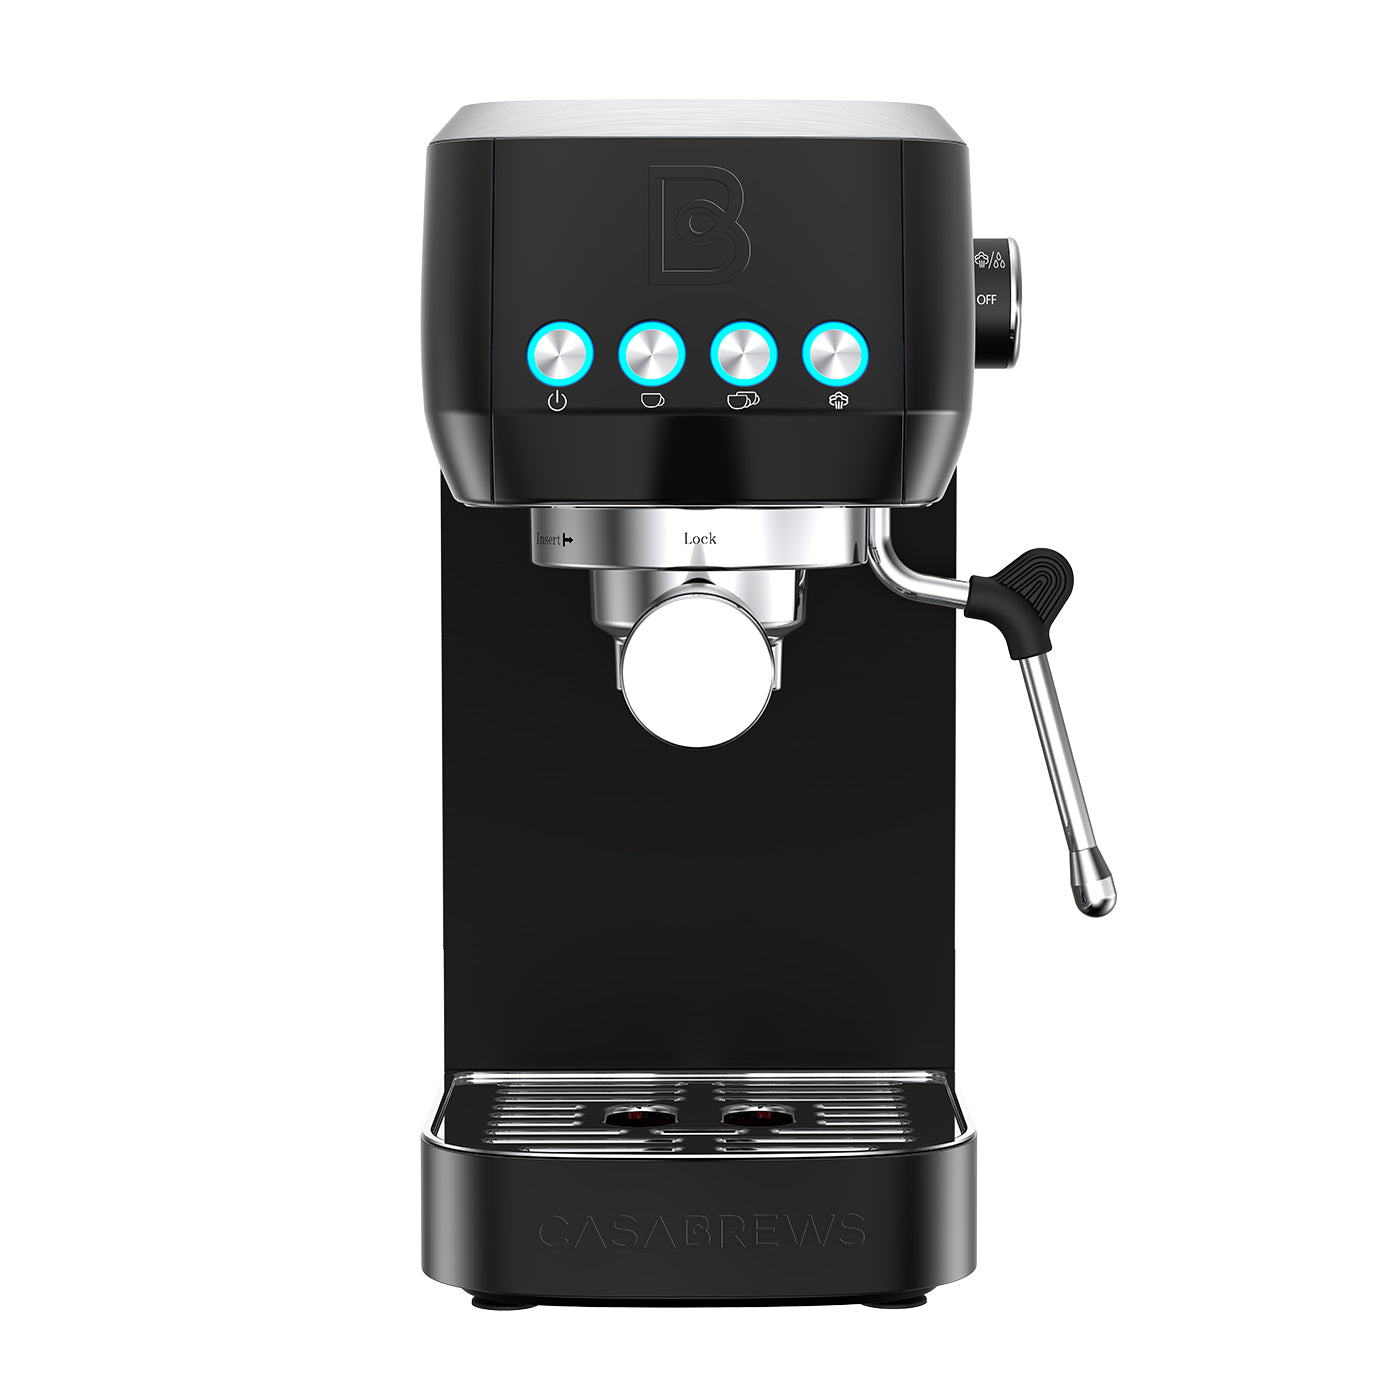 CASABREWS 3700ESSENTIAL™ 20-Bar Espresso Coffee Machine with Space Saving Design